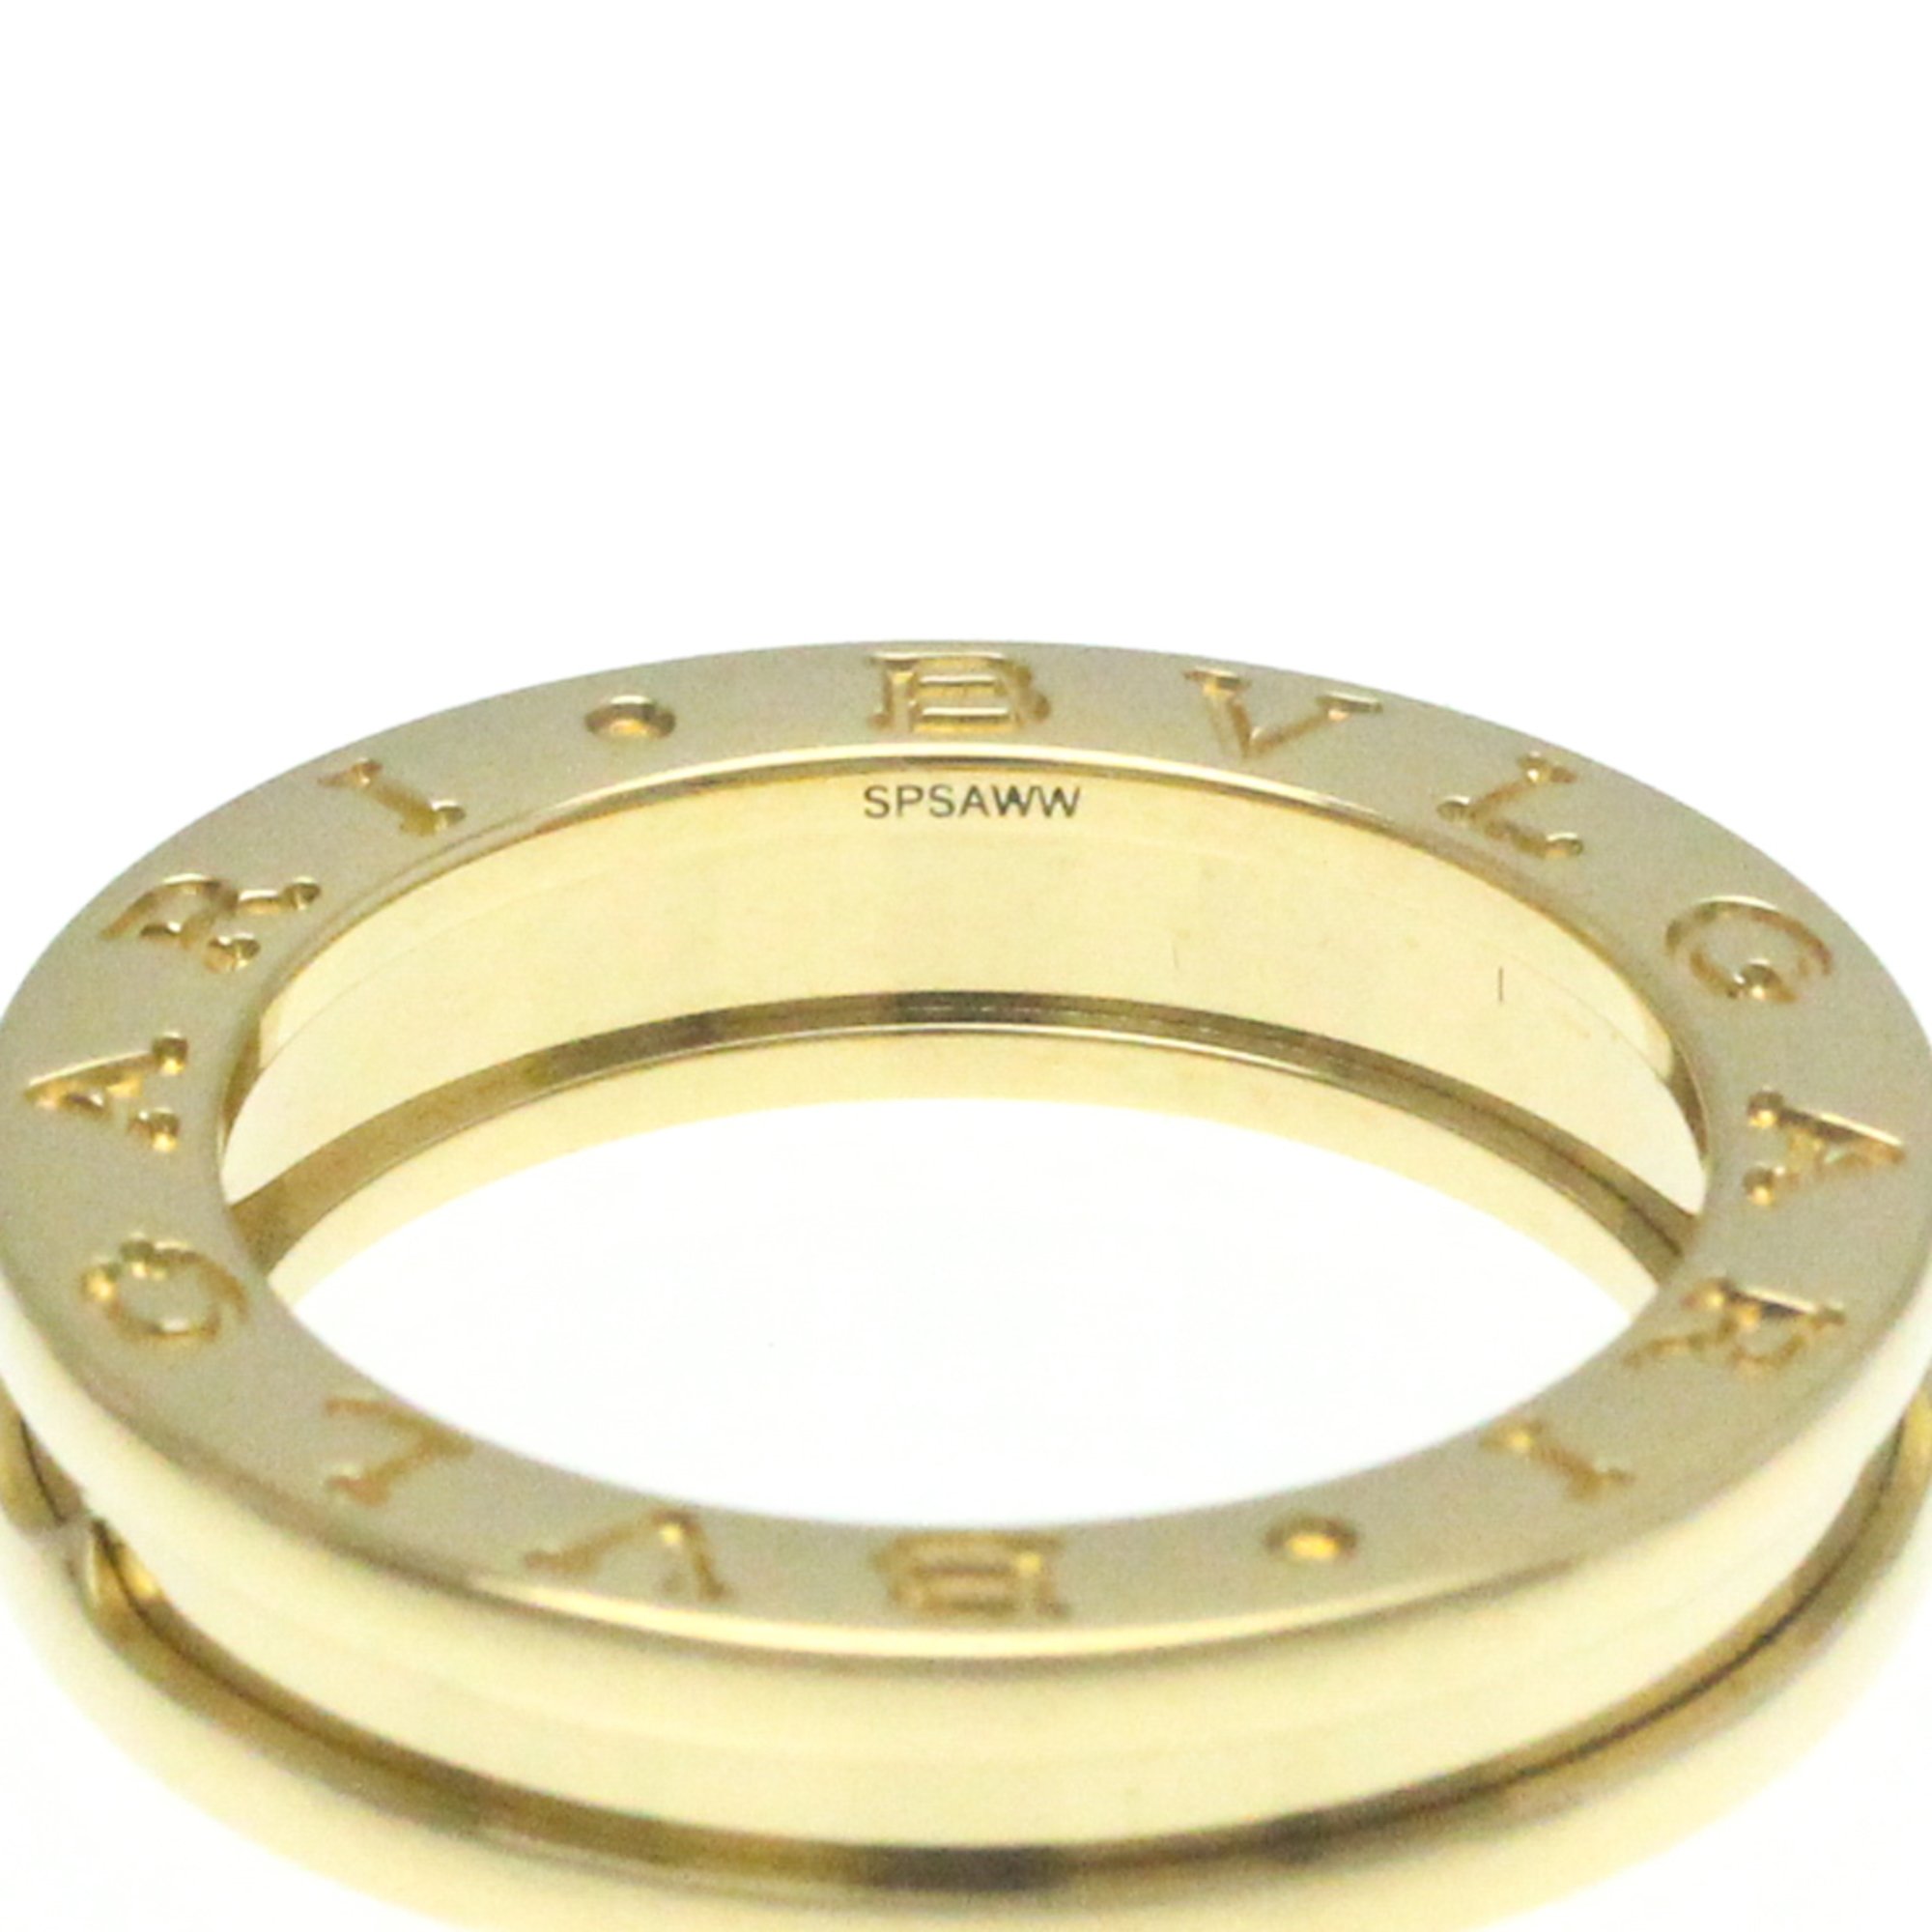 Bvlgari B.zero1 Yellow Gold (18K) Fashion No Stone Band Ring Gold